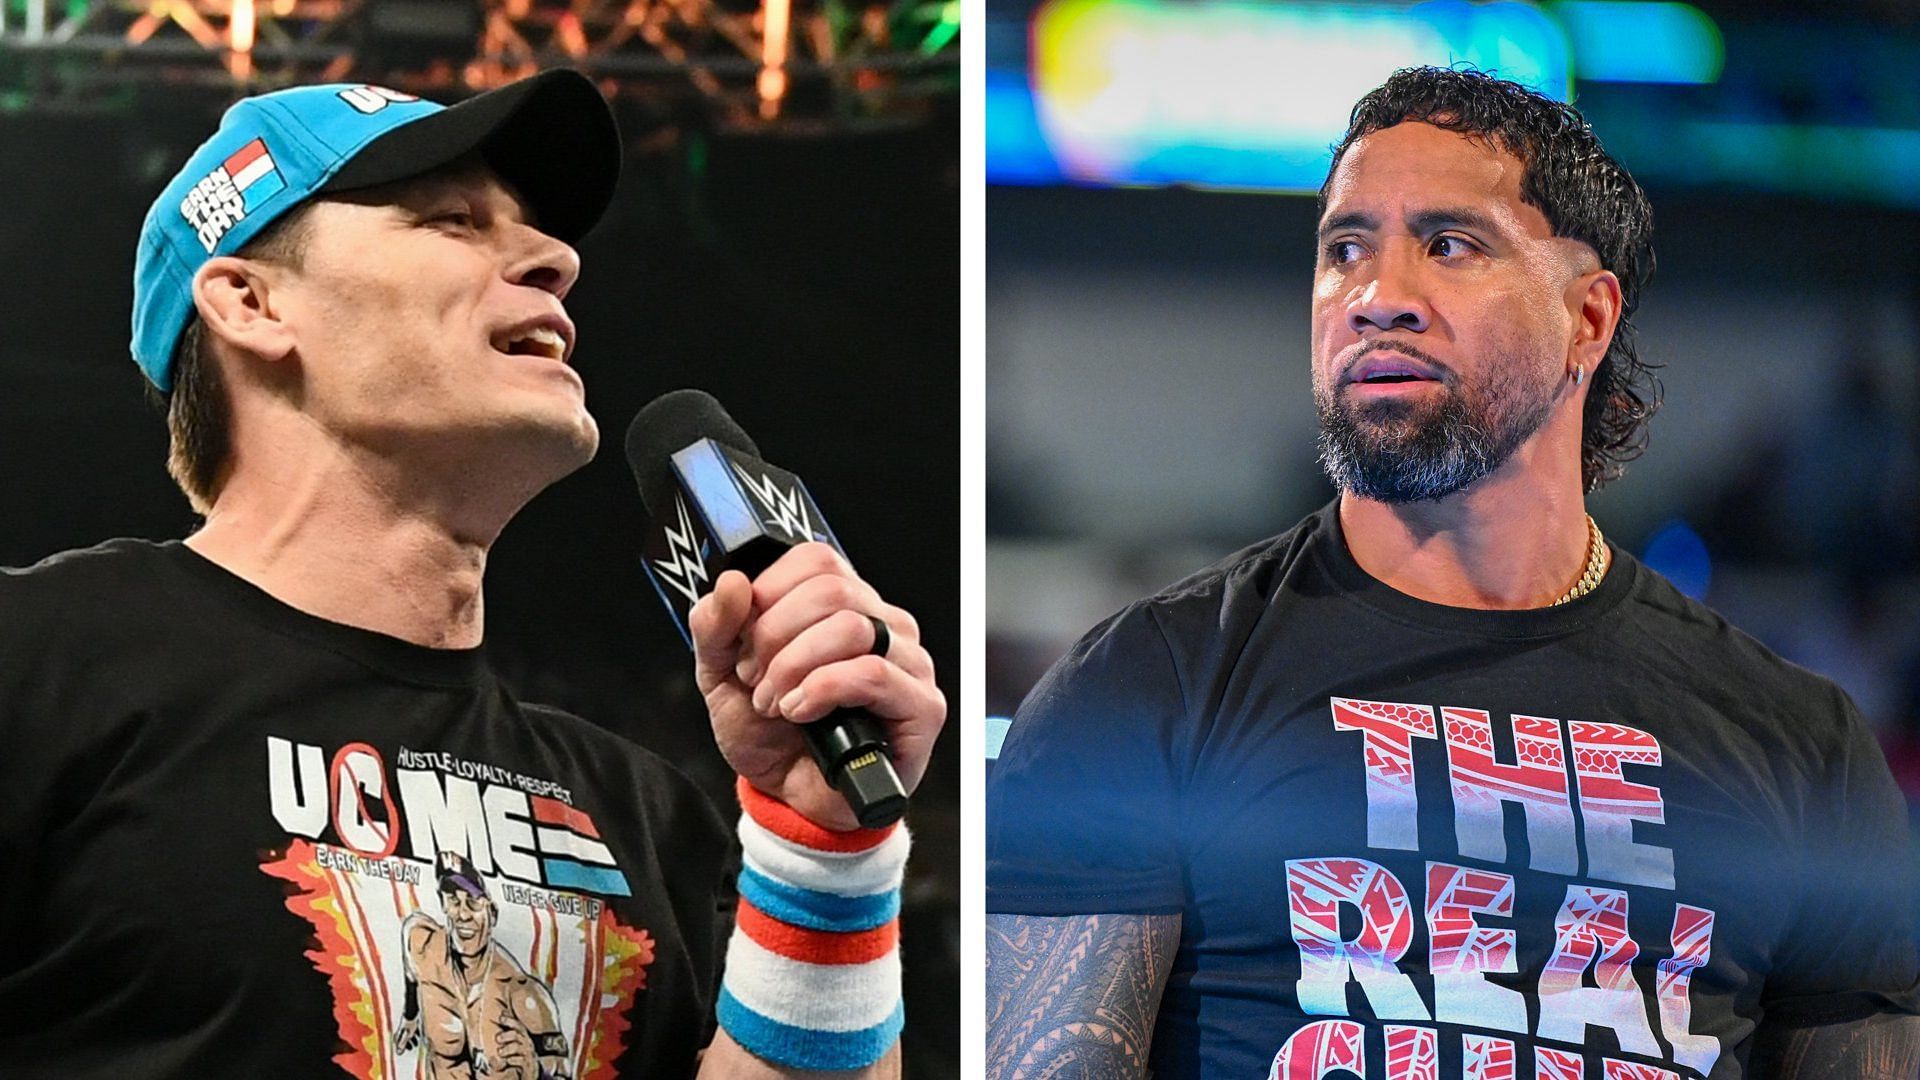 Major surprises could happen on WWE SmackDown